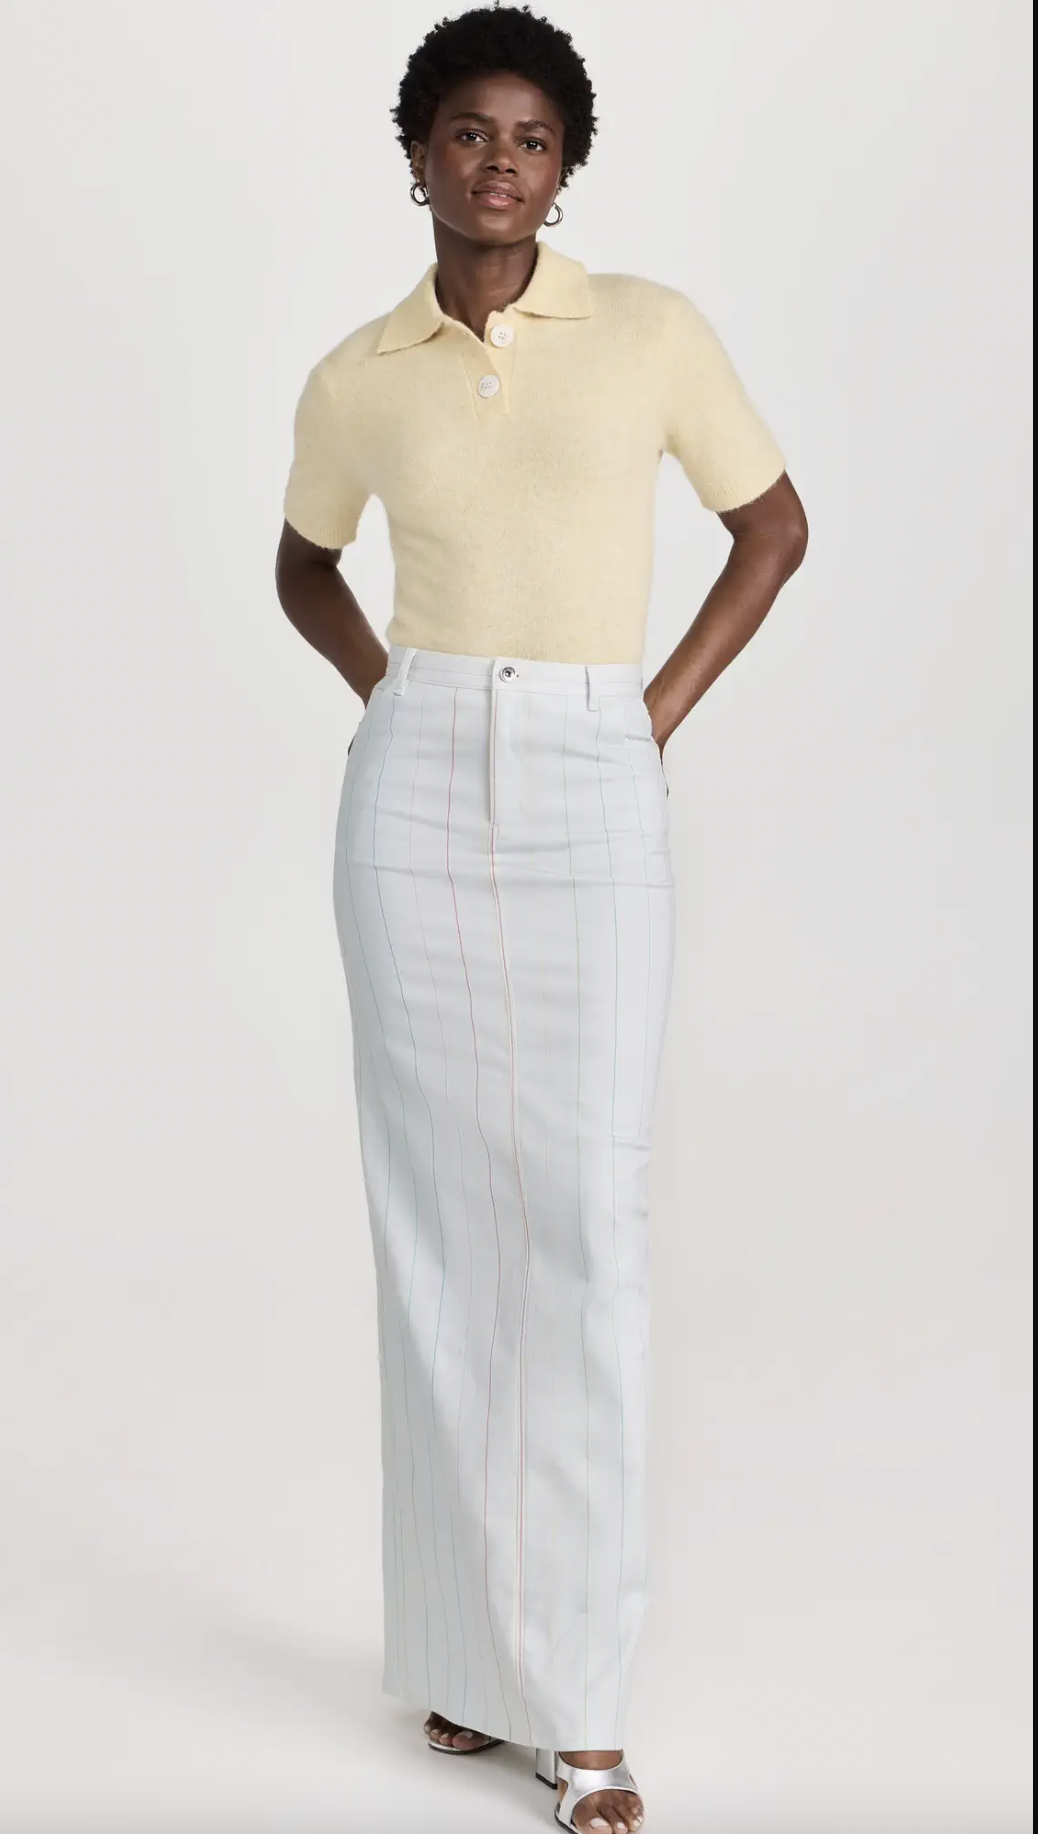 Buy White Denim Skirt Women High Waist online | Lazada.com.ph